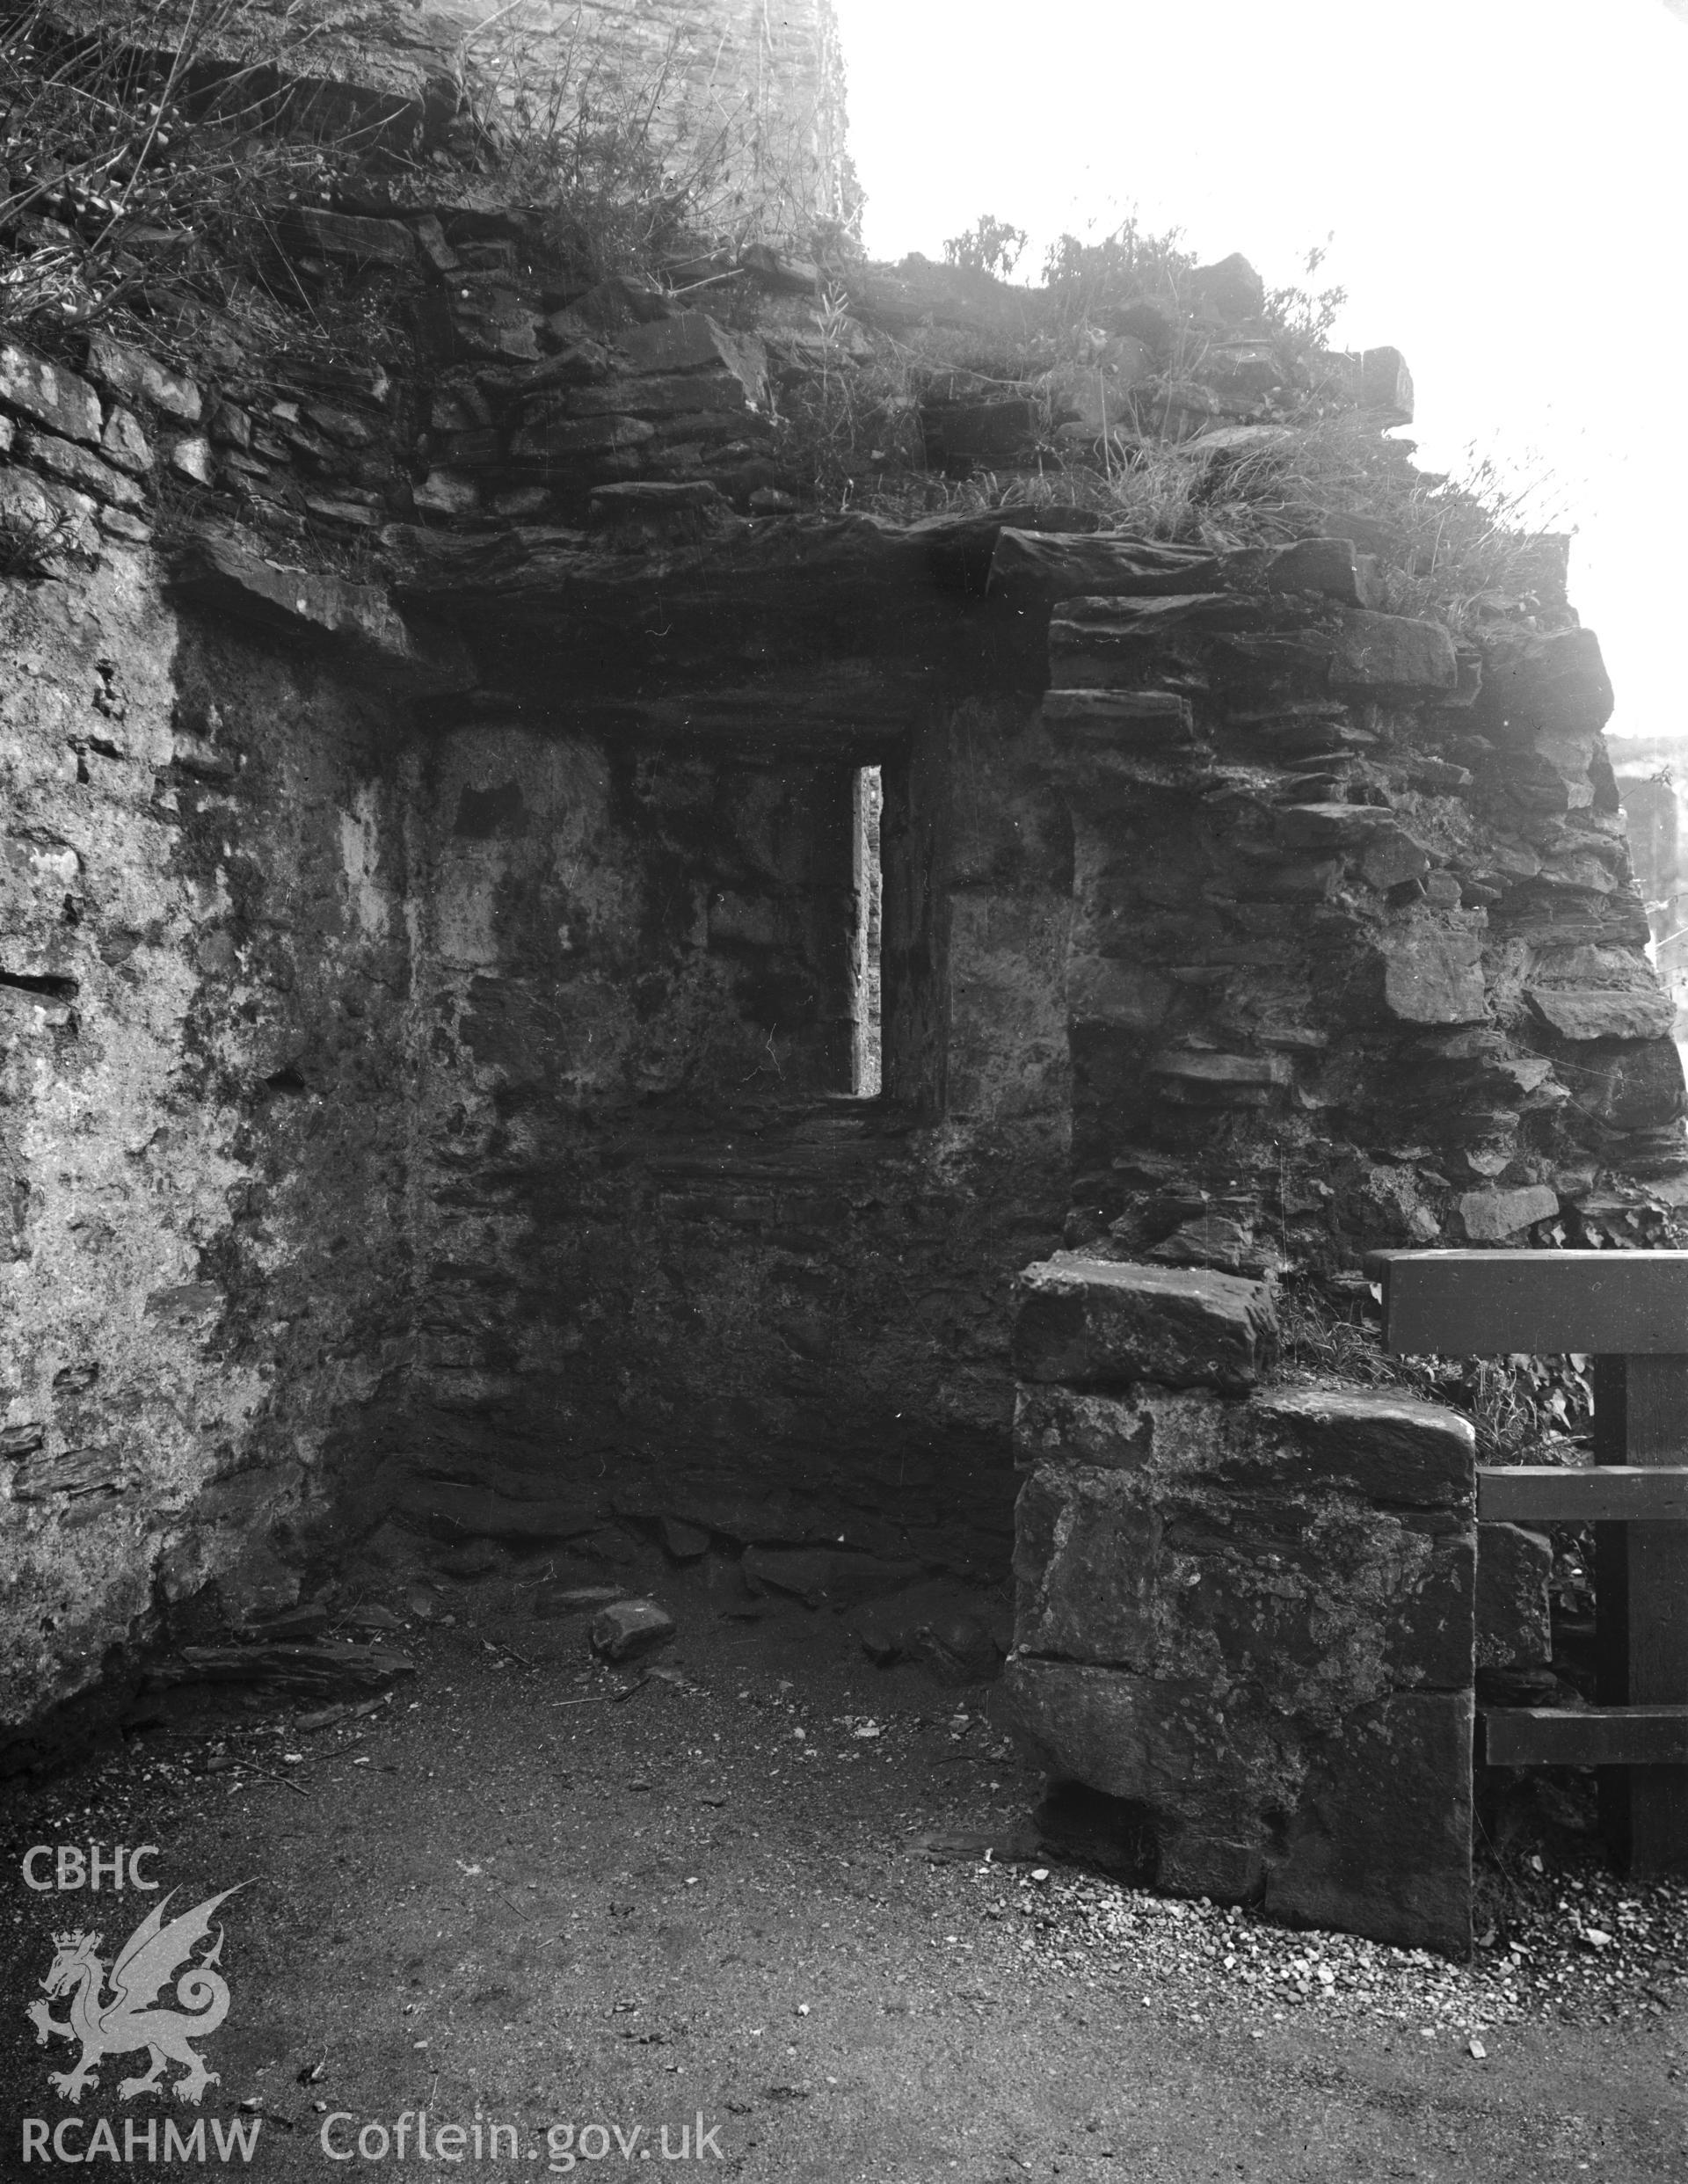 View of arrowslit window at Conwy Castle, taken in 11.01.1952.